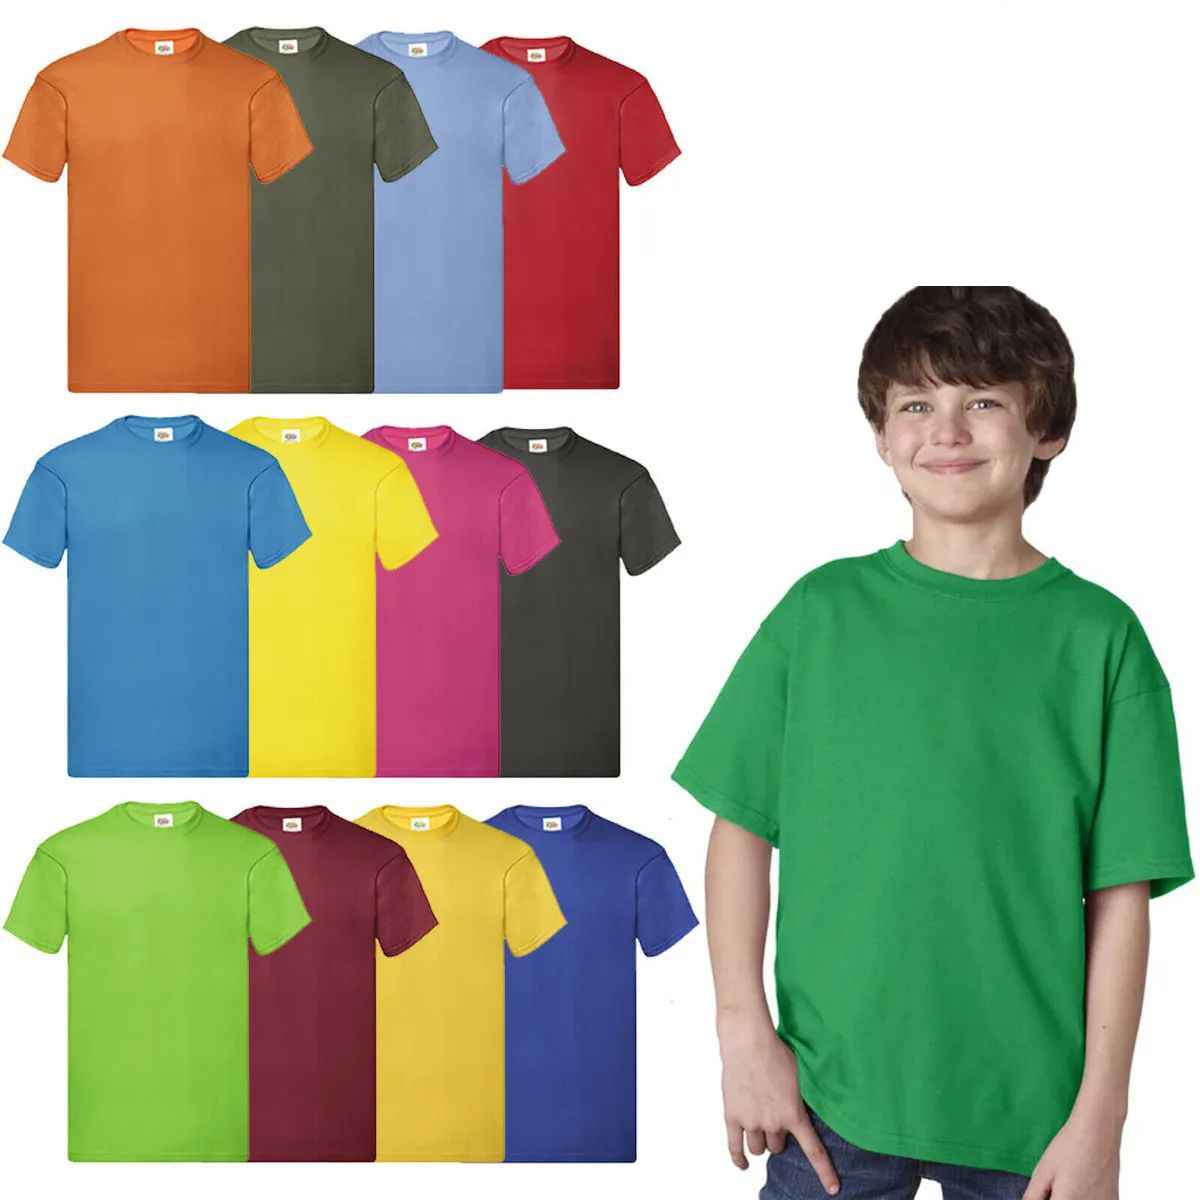 576 Bulk Billion Hats Kids Youth Cotton Assorted Colors T Shirts Size M